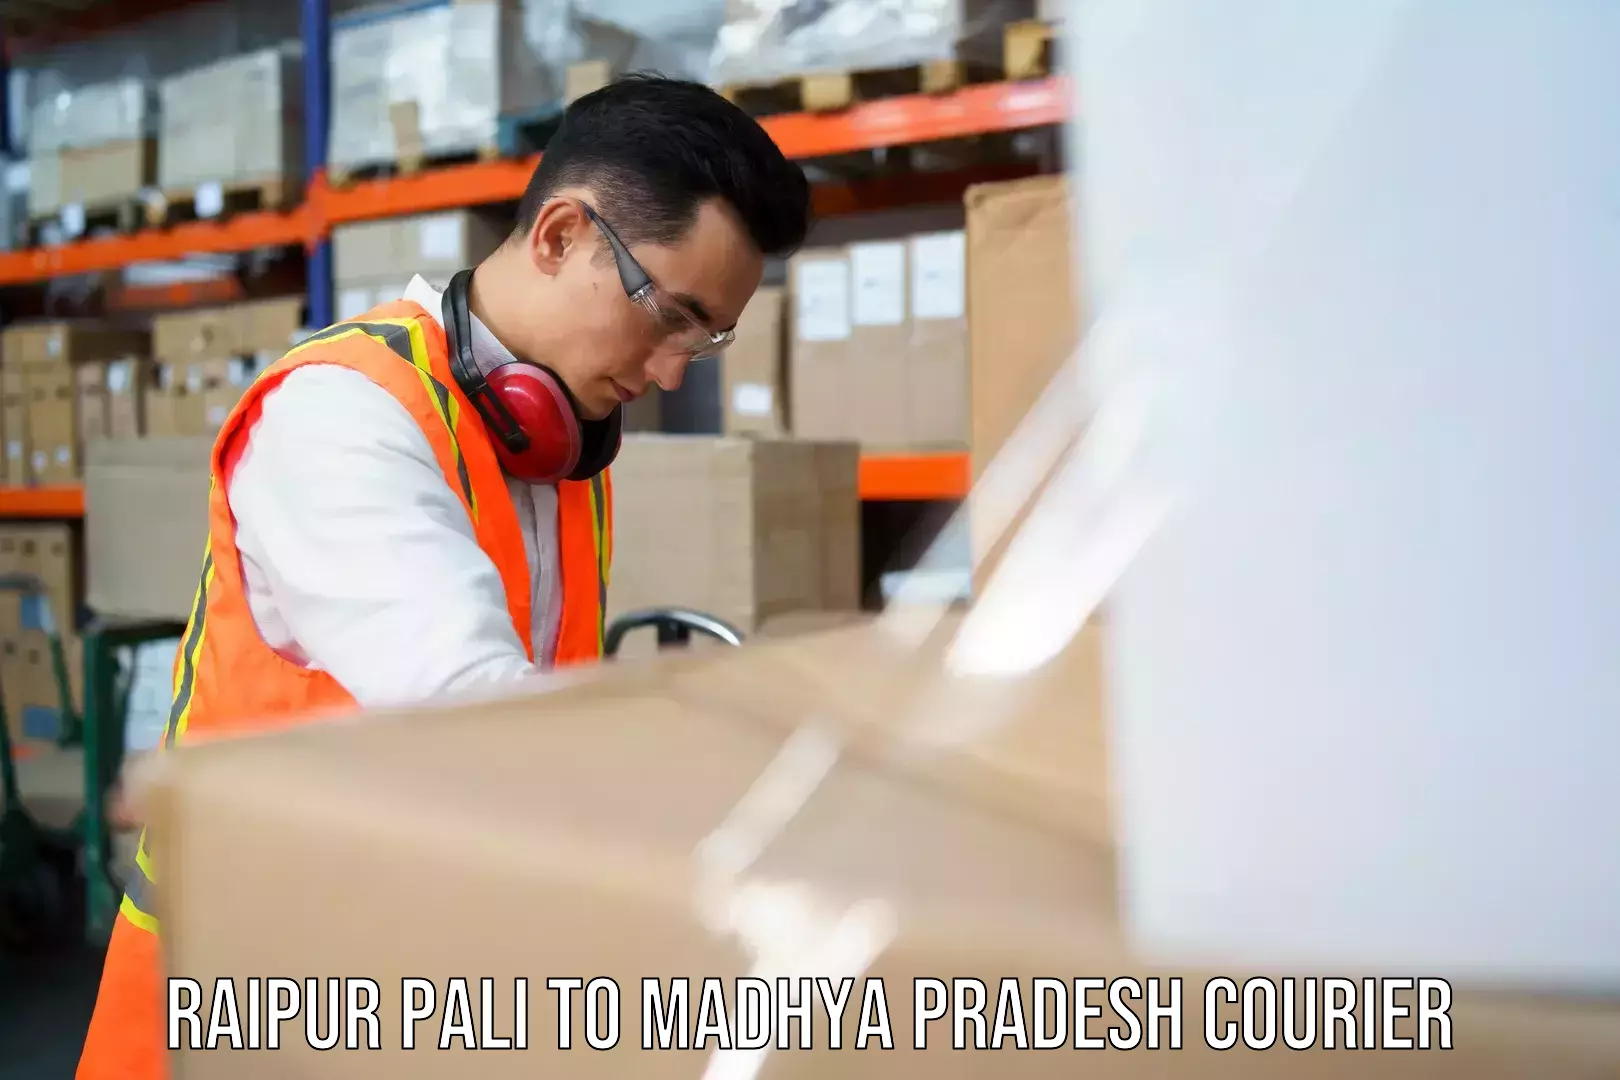 24/7 courier service Raipur Pali to Madhya Pradesh